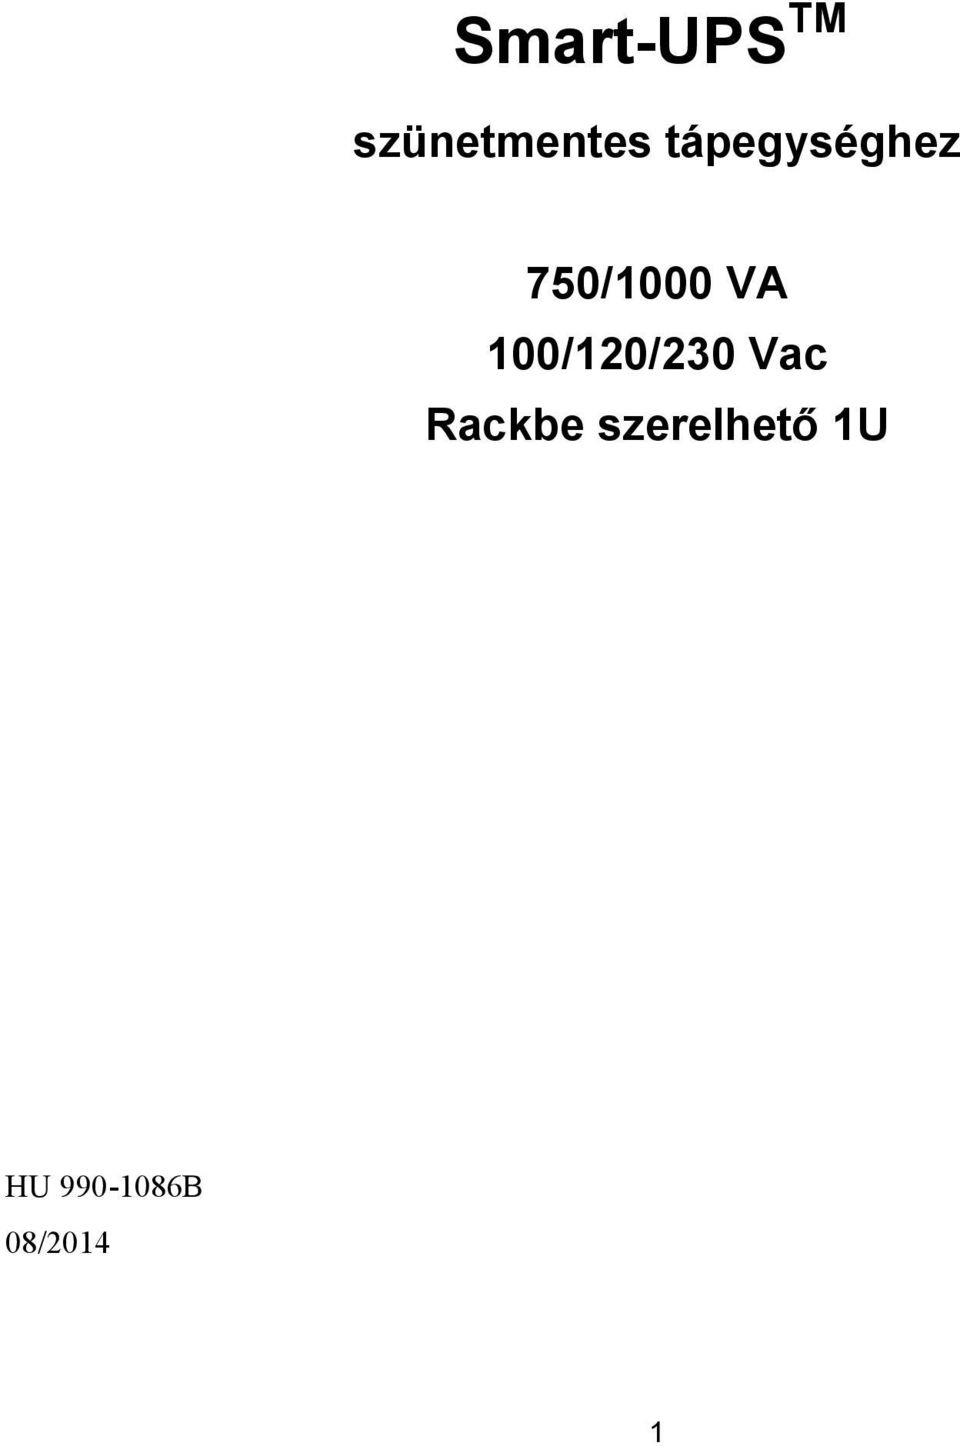 100/120/230 Vac Rackbe